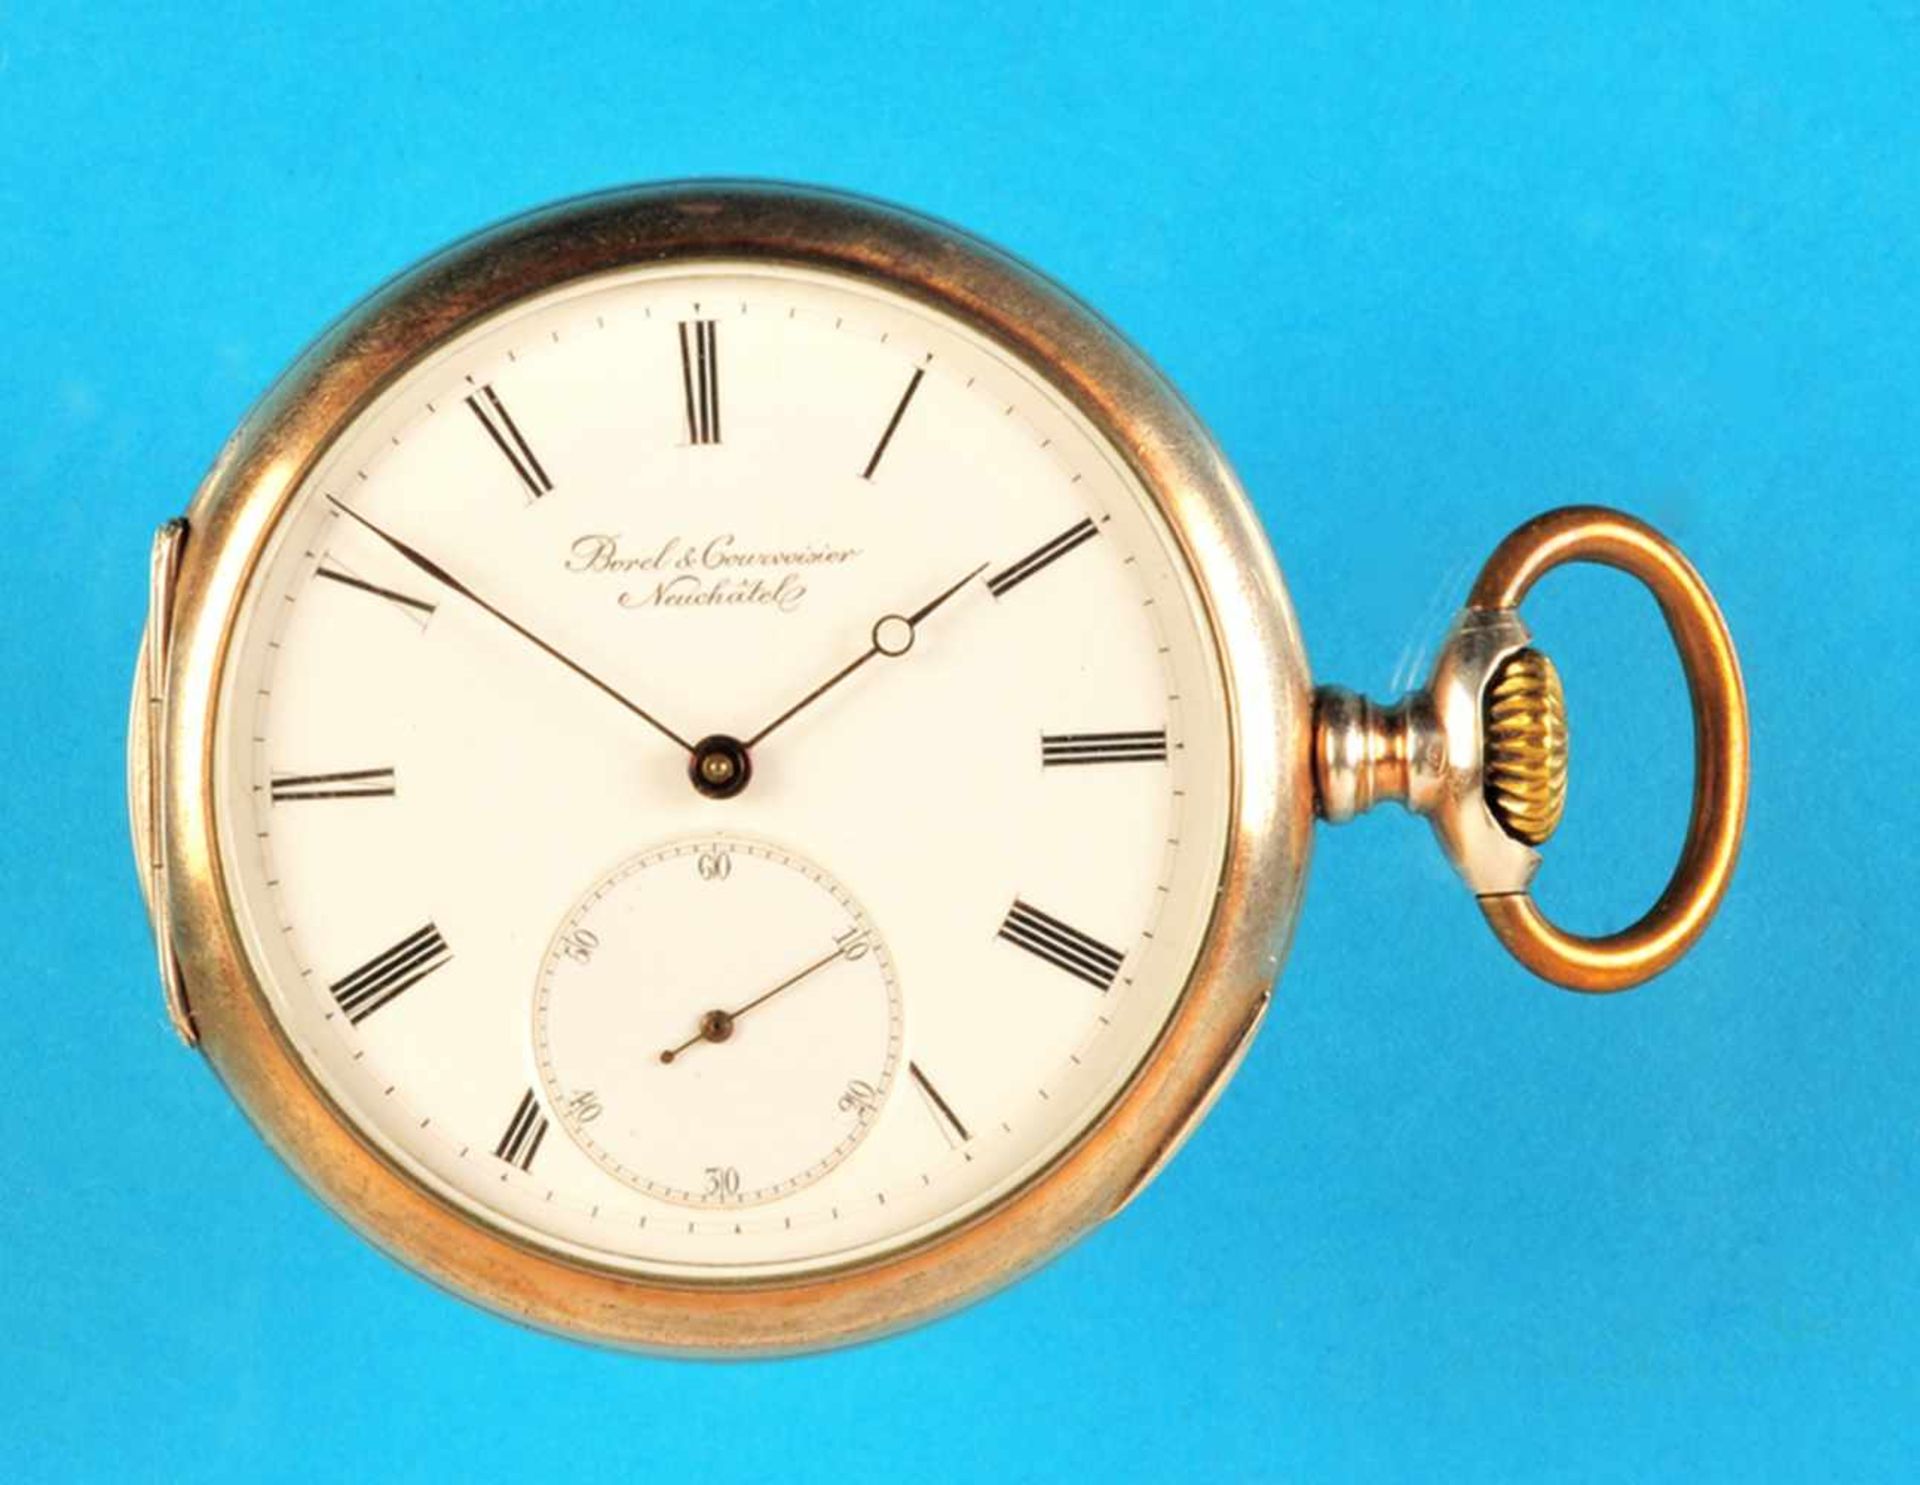 Silver pocket watch, Borel & Courvoisier NeuchatelSilbertaschenuhr, Borel & Courvoisier Neuchatel,